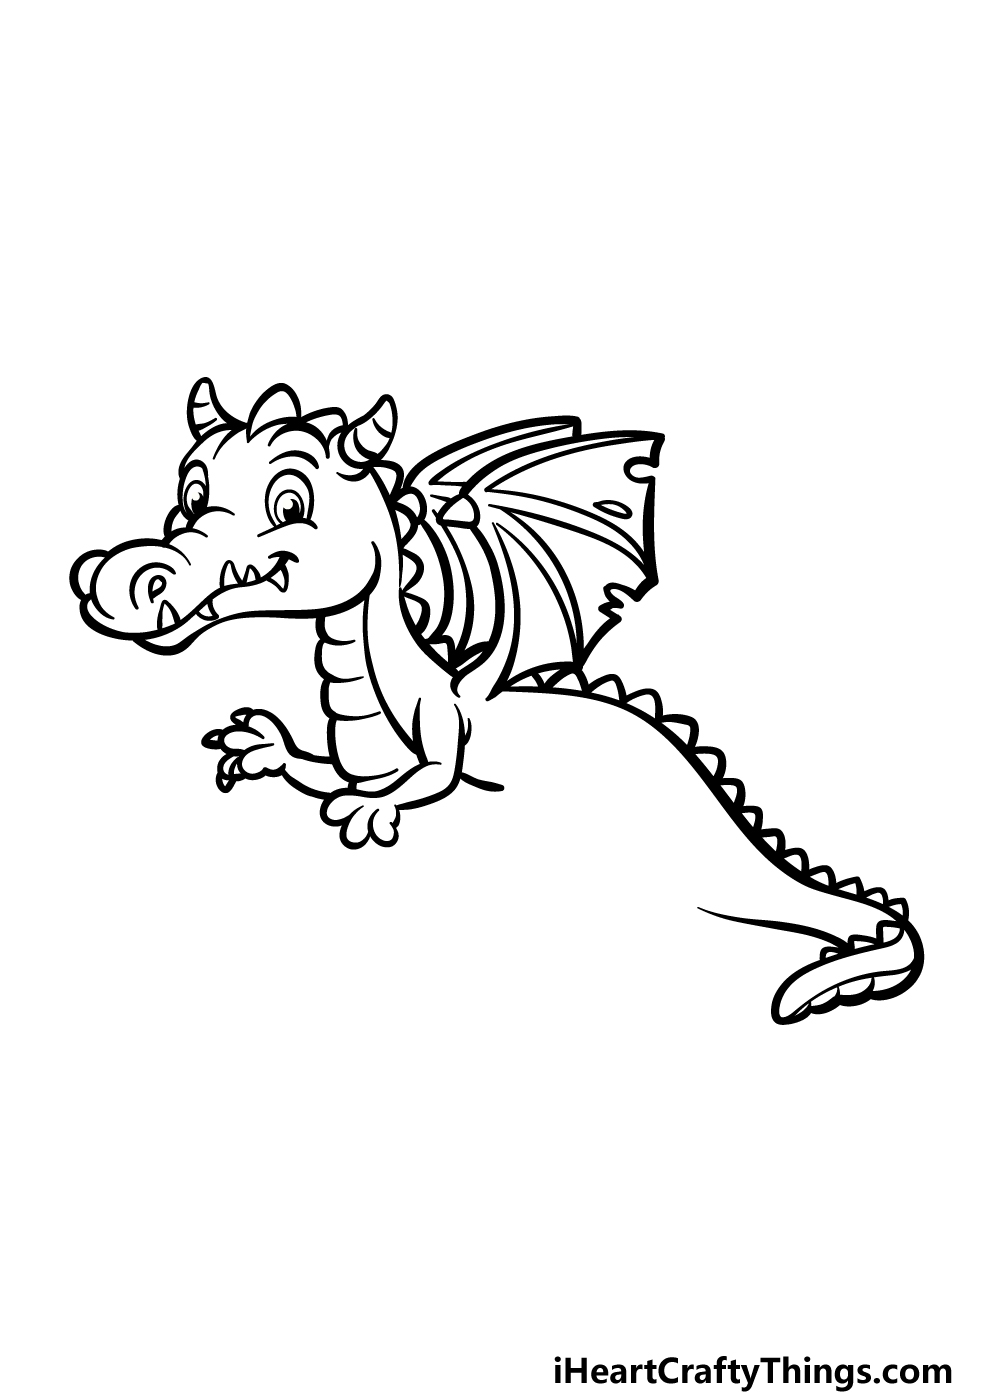 how to draw a cartoon dragon step 3